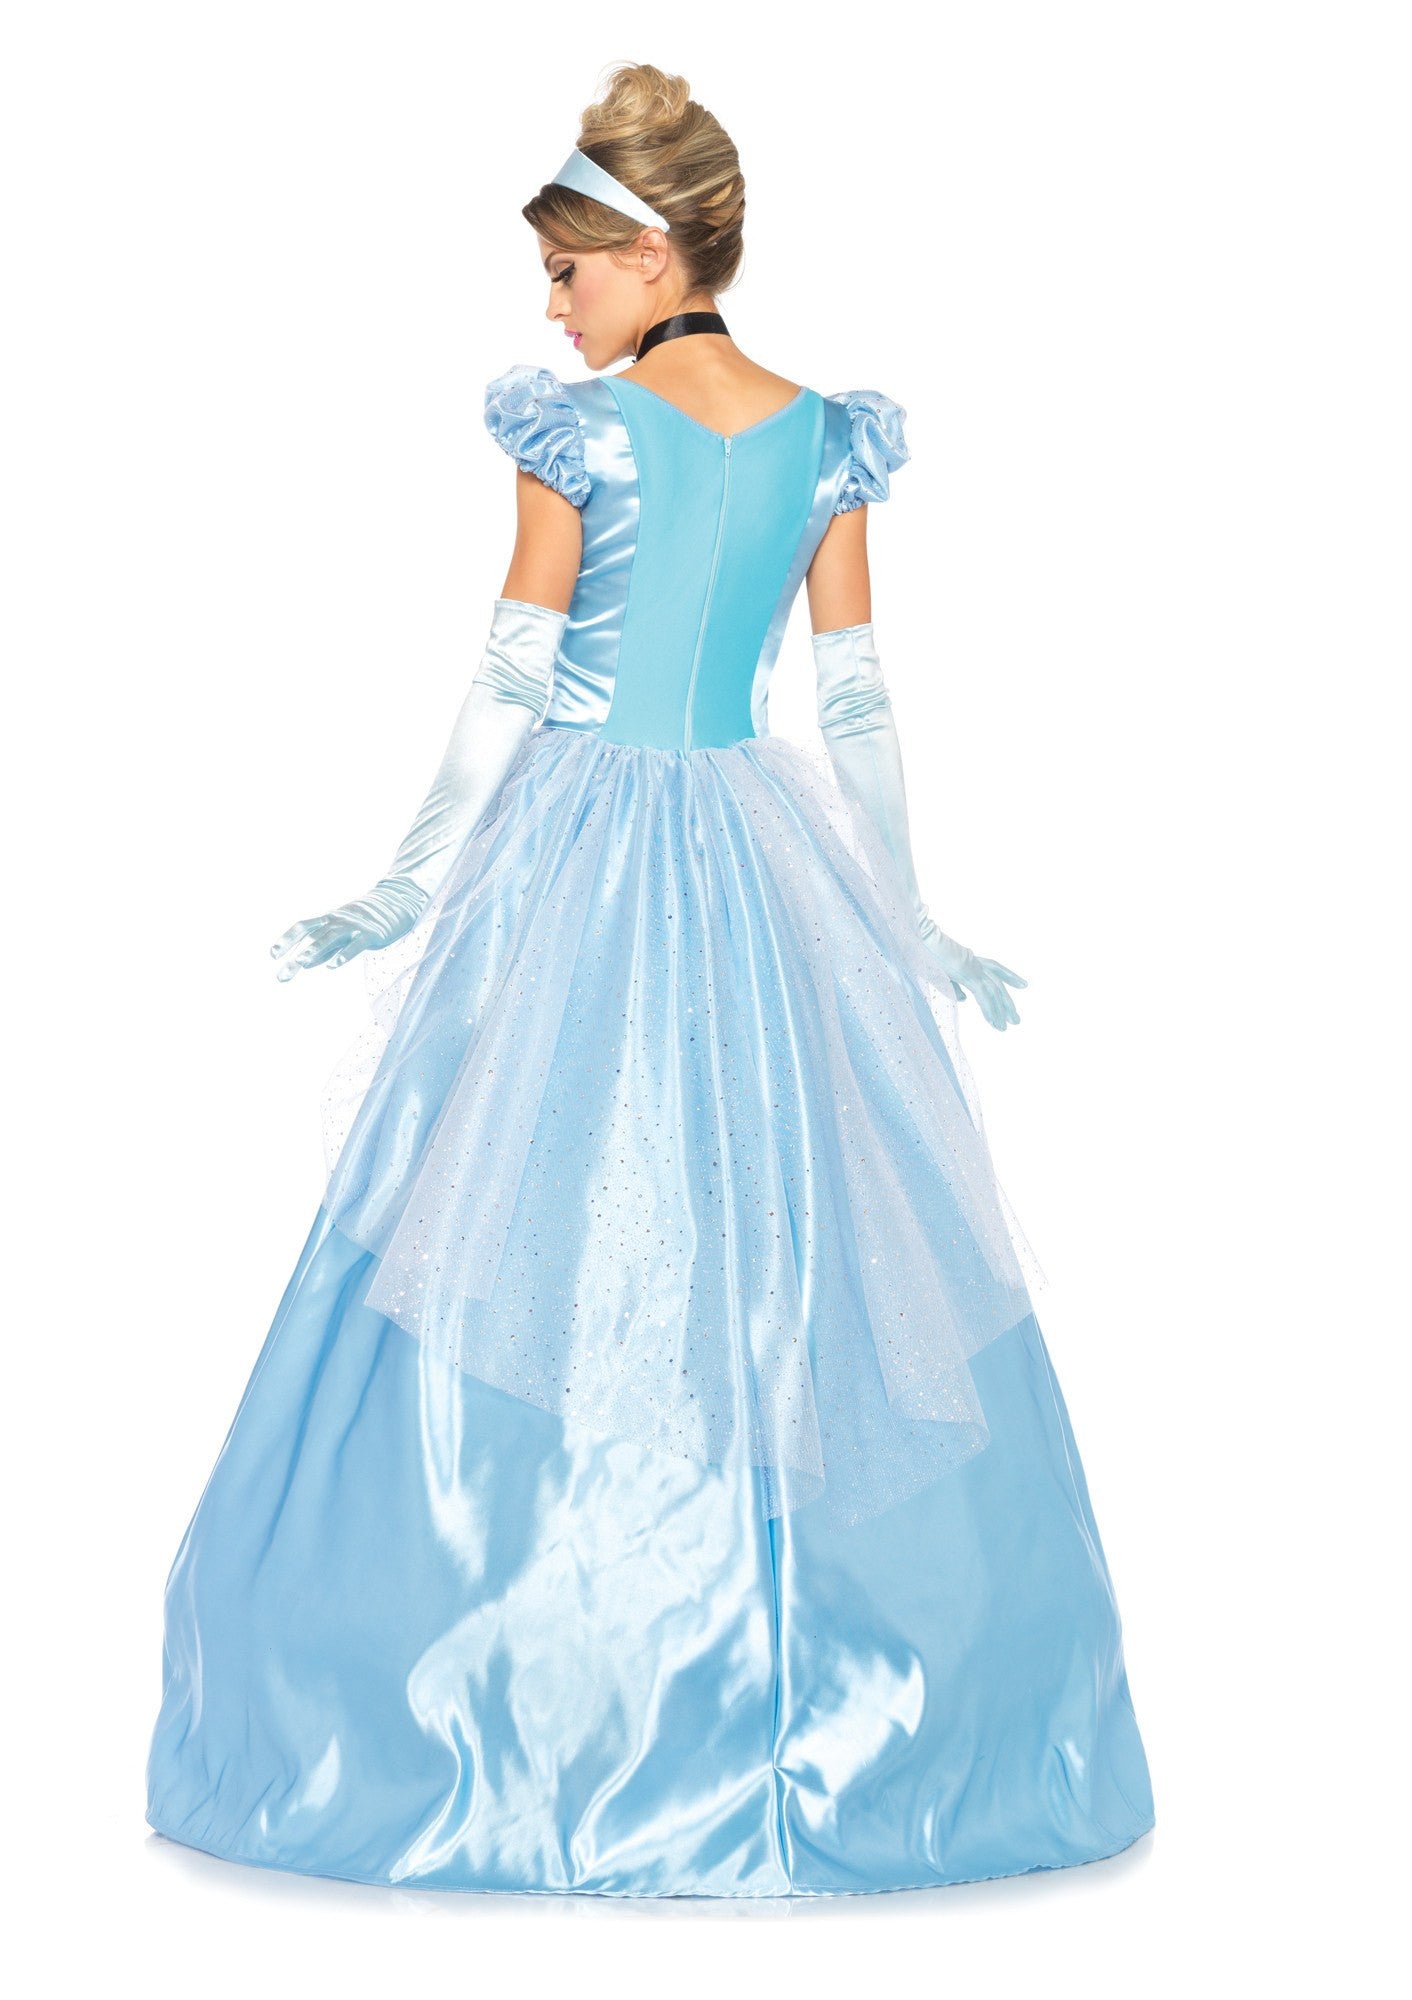 Classic Cinderella Costume - Stagecoach Jewelry